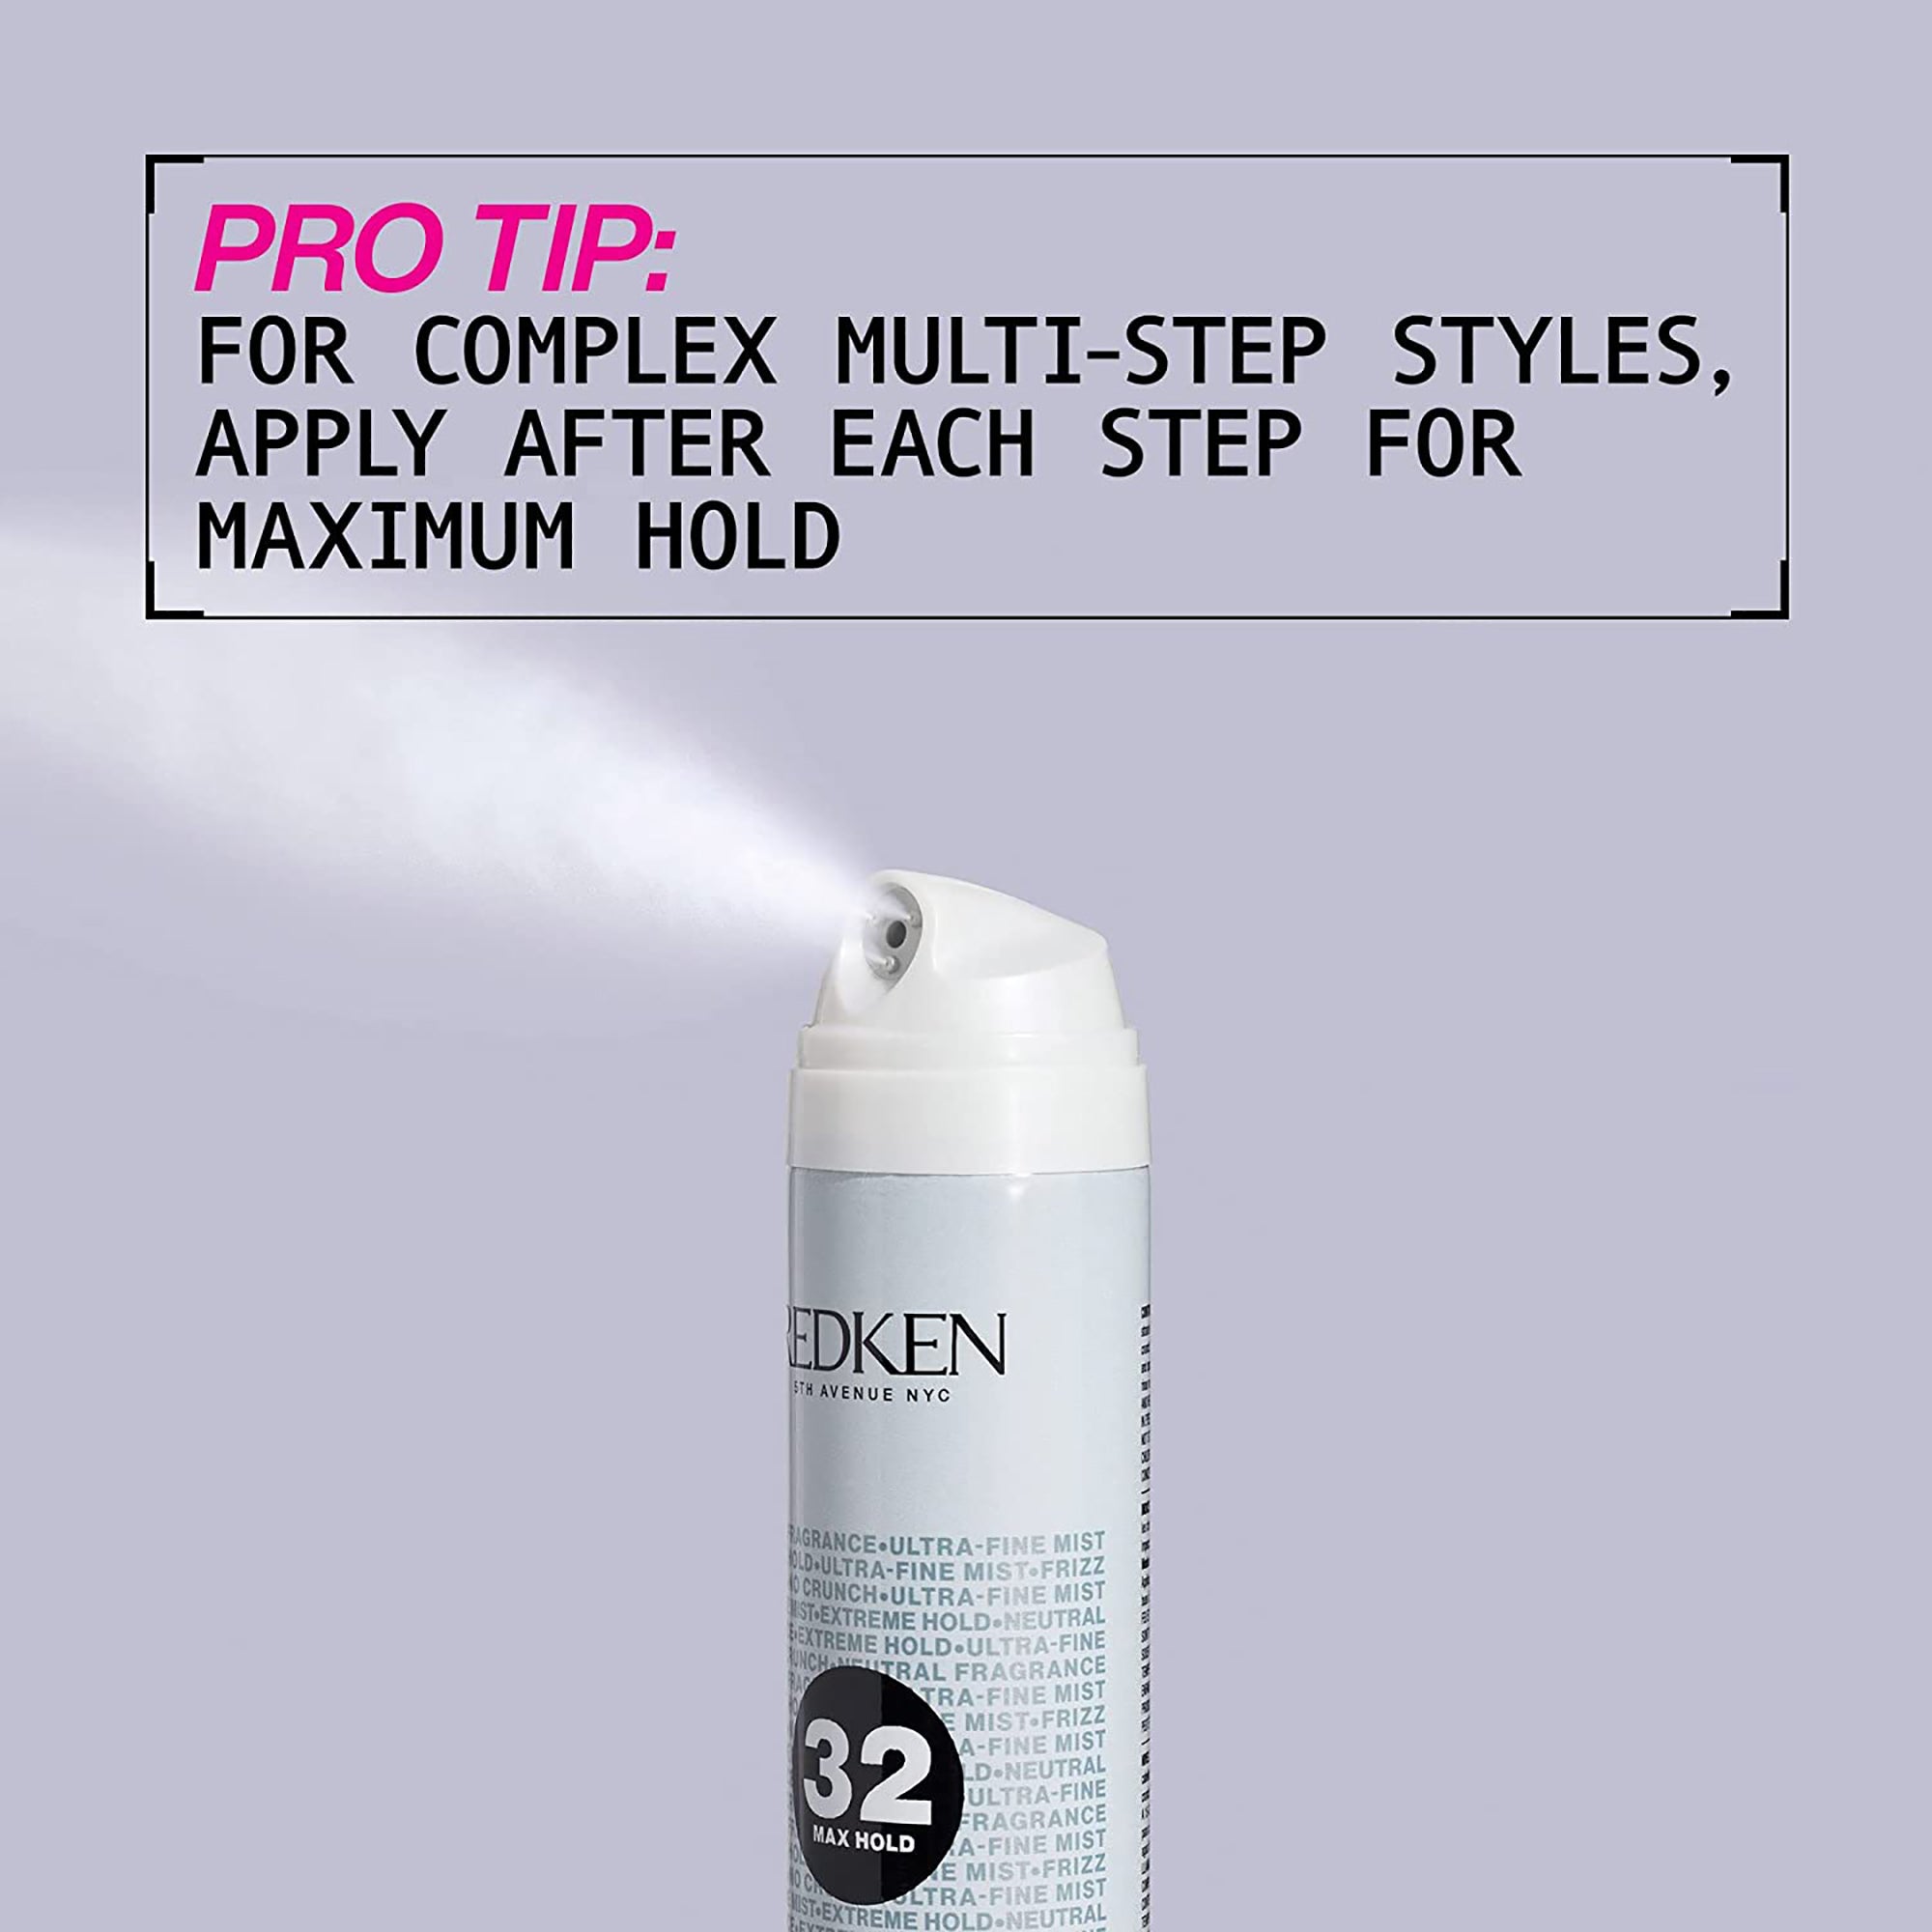 Redken Max Hold Neutral Fragrance Hairspray / 9OZ